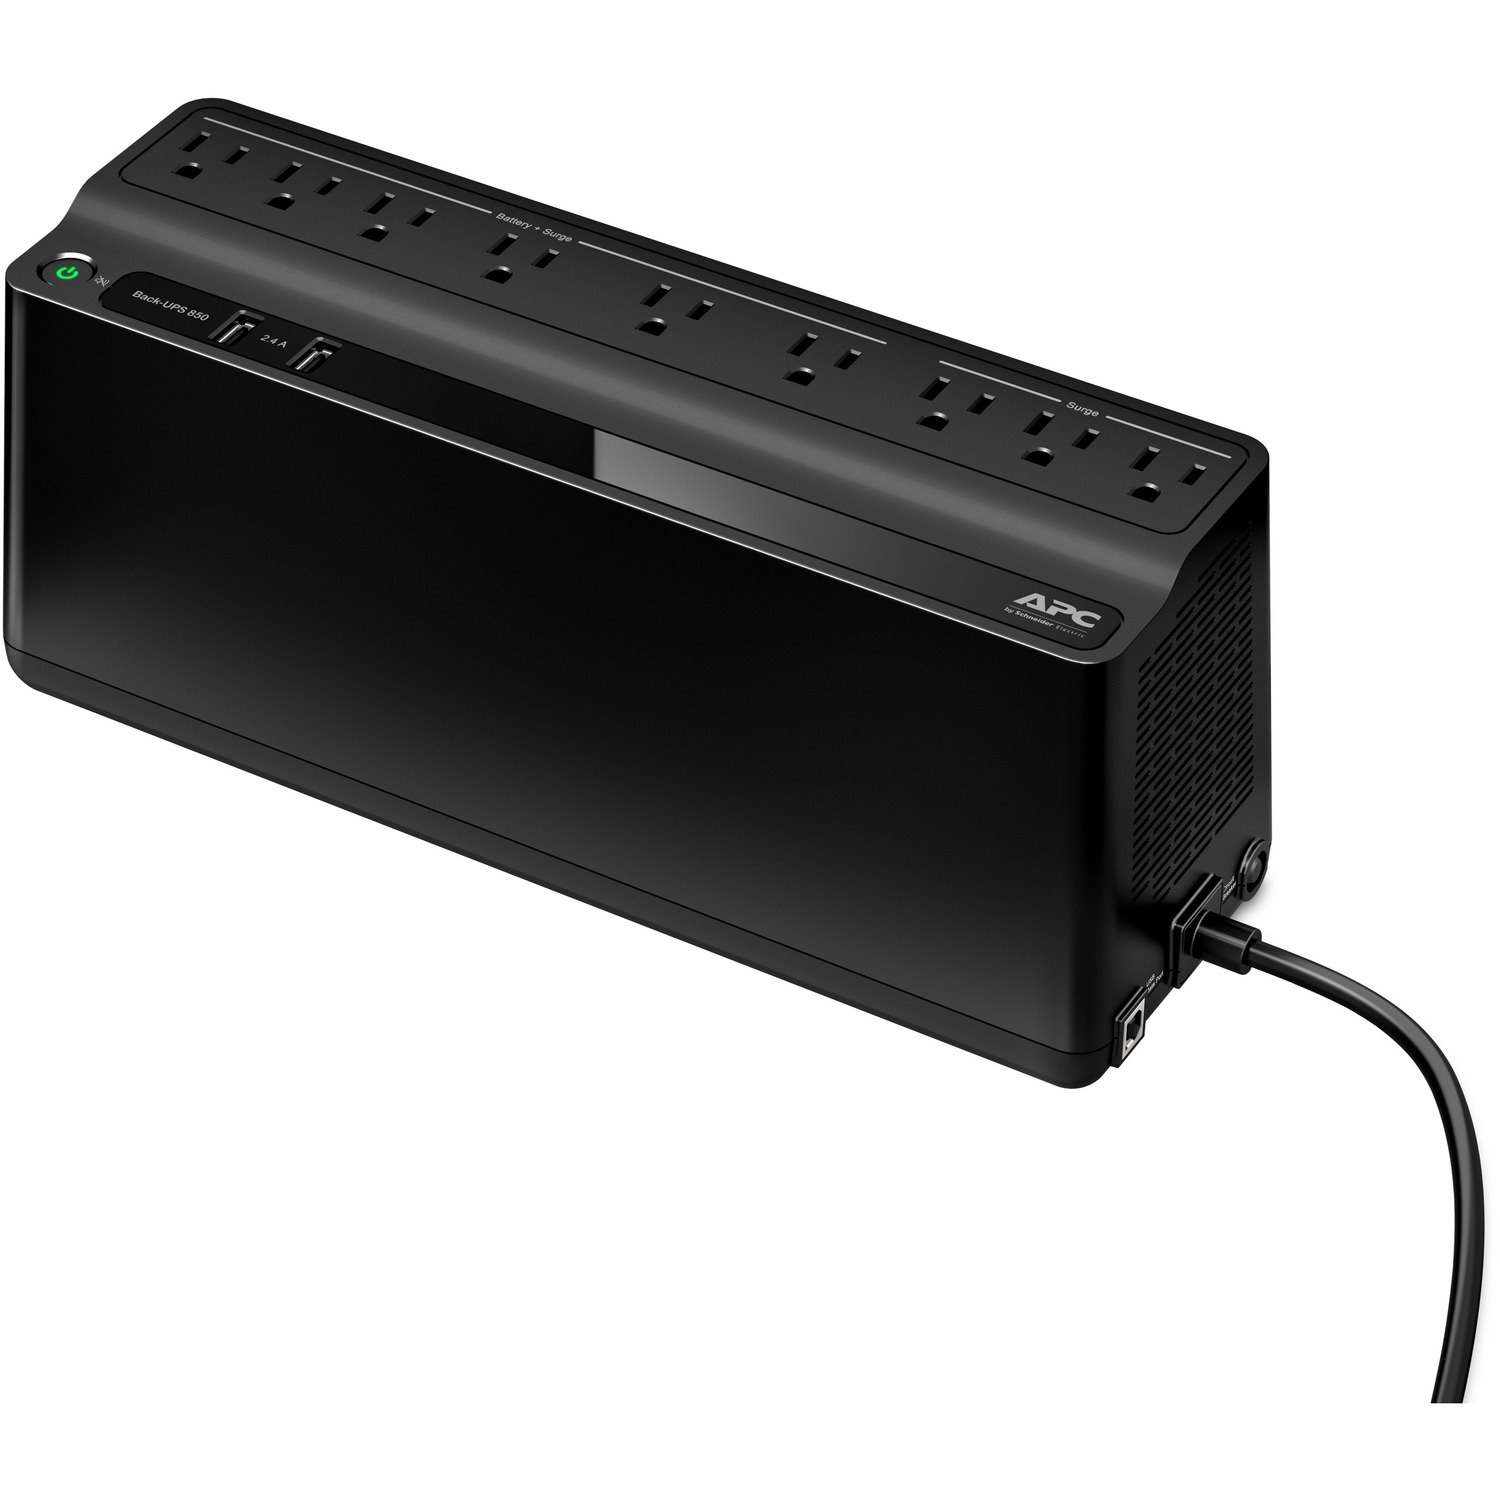 APC by Schneider Electric Back-UPS ES 850VA, 2 USB Charging Ports, 120V